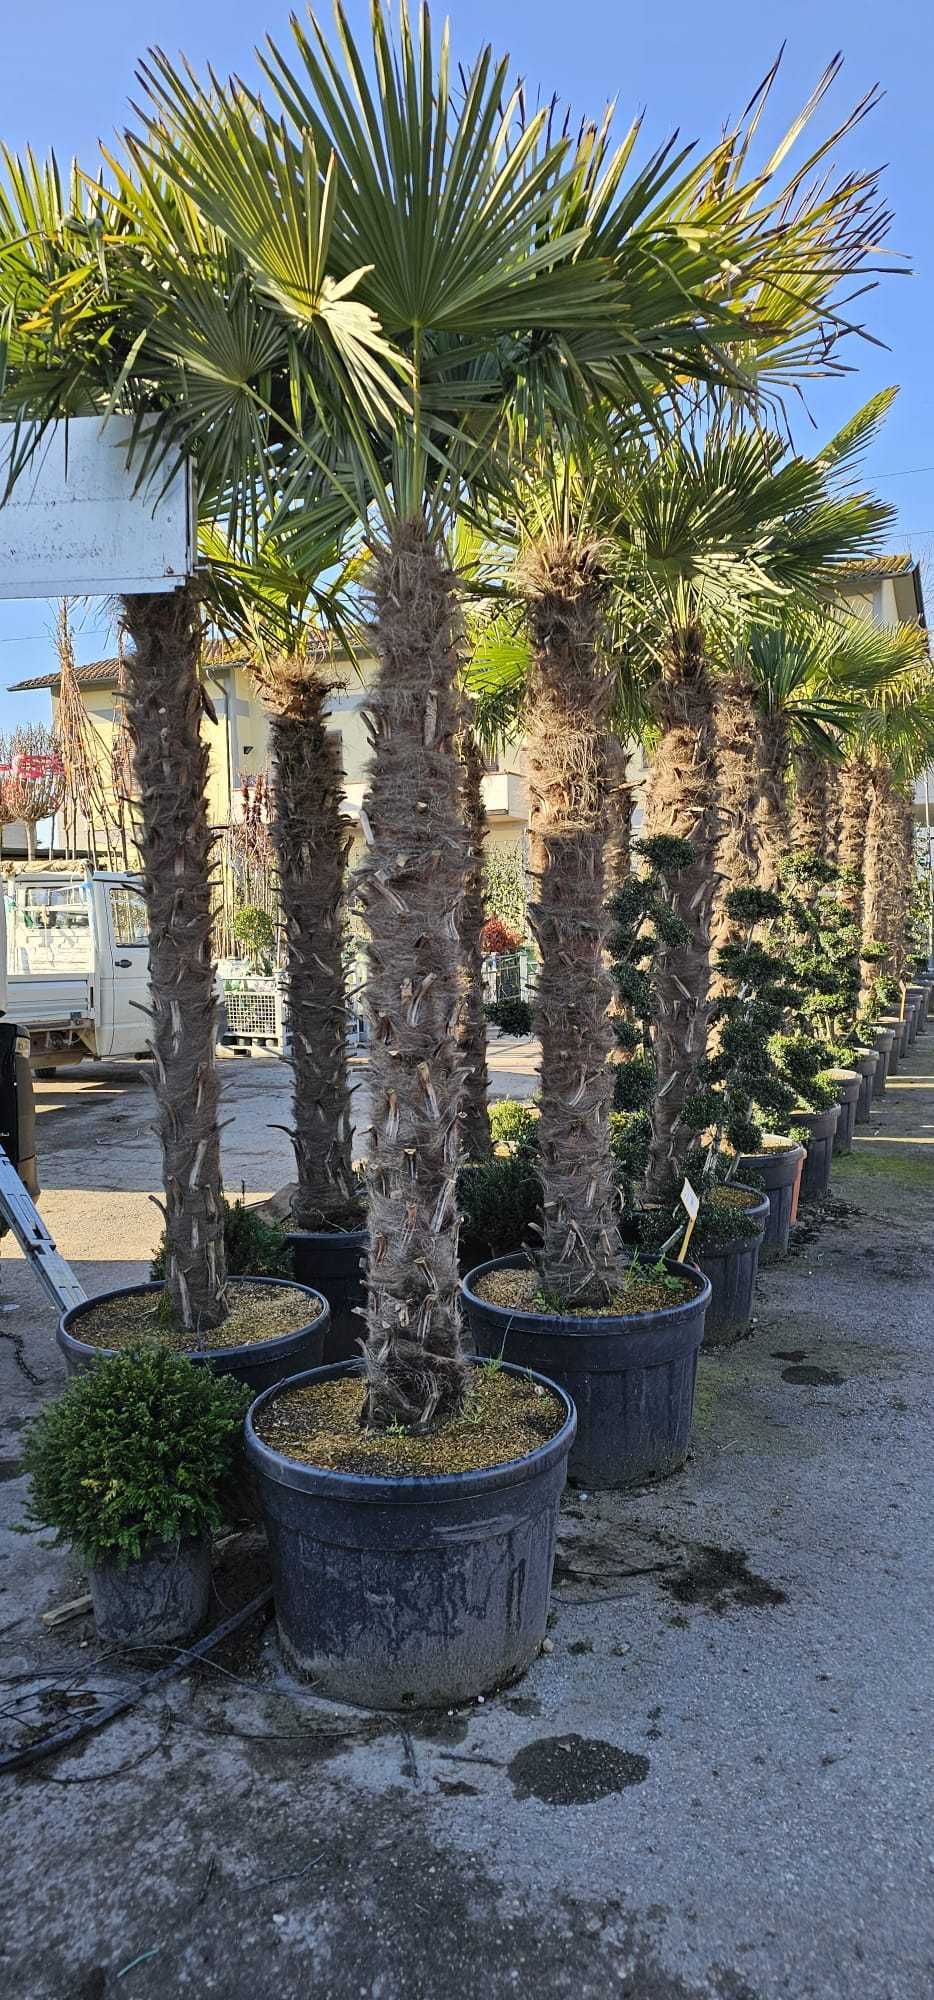 Palmieri ornamentalii rezistenți la frig